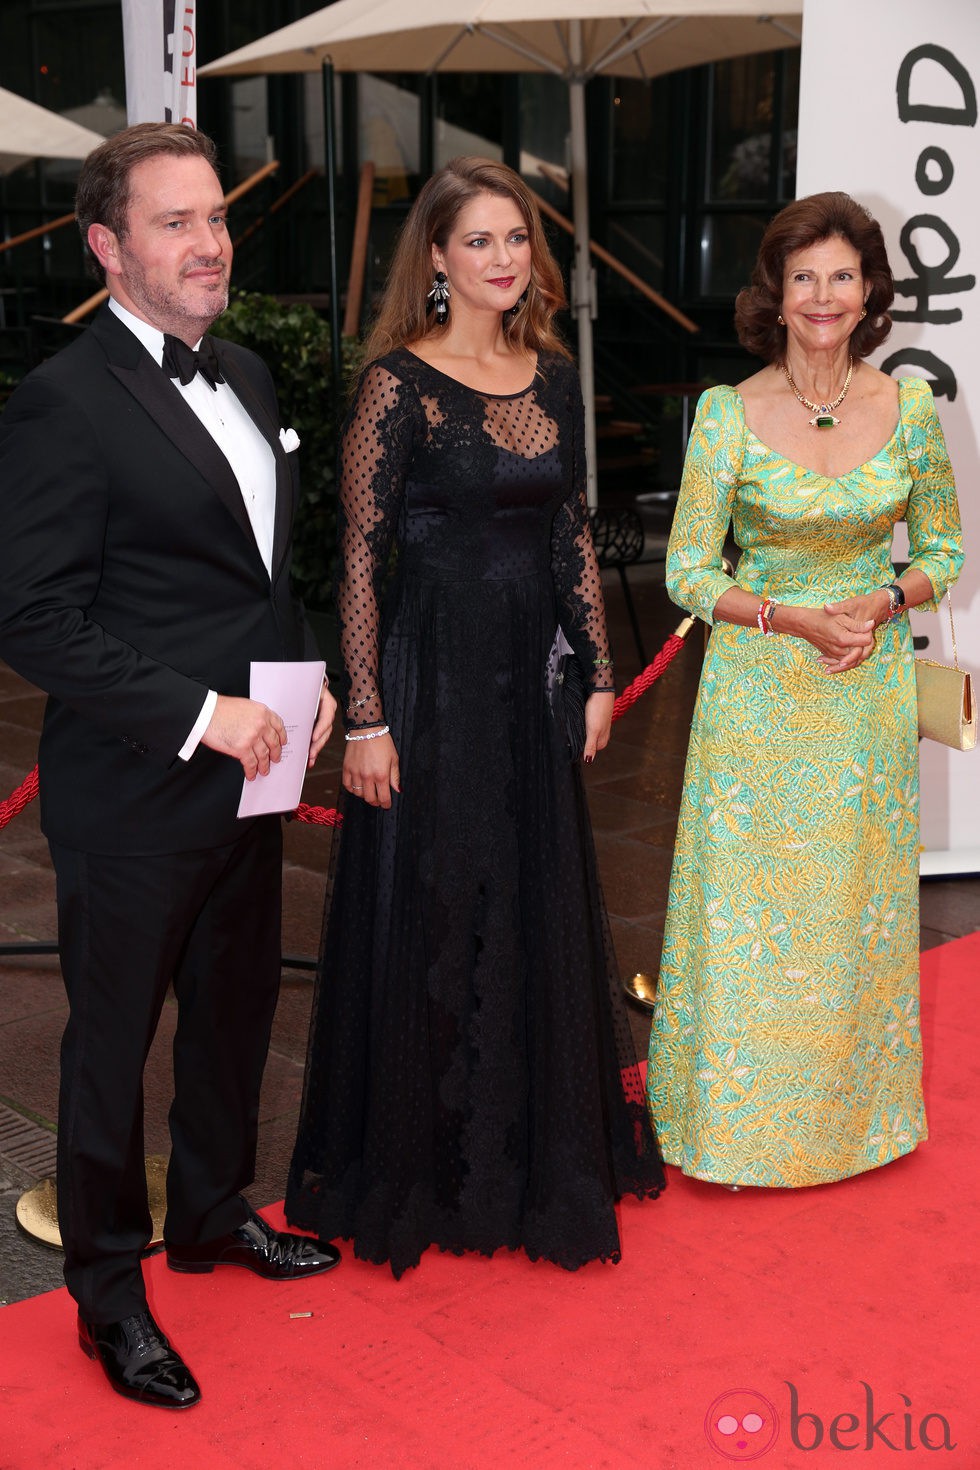 La Princesa Magdalena, Chris O'Neill y la Reina Silvia en la cena organizada por la World Childhood Foundation